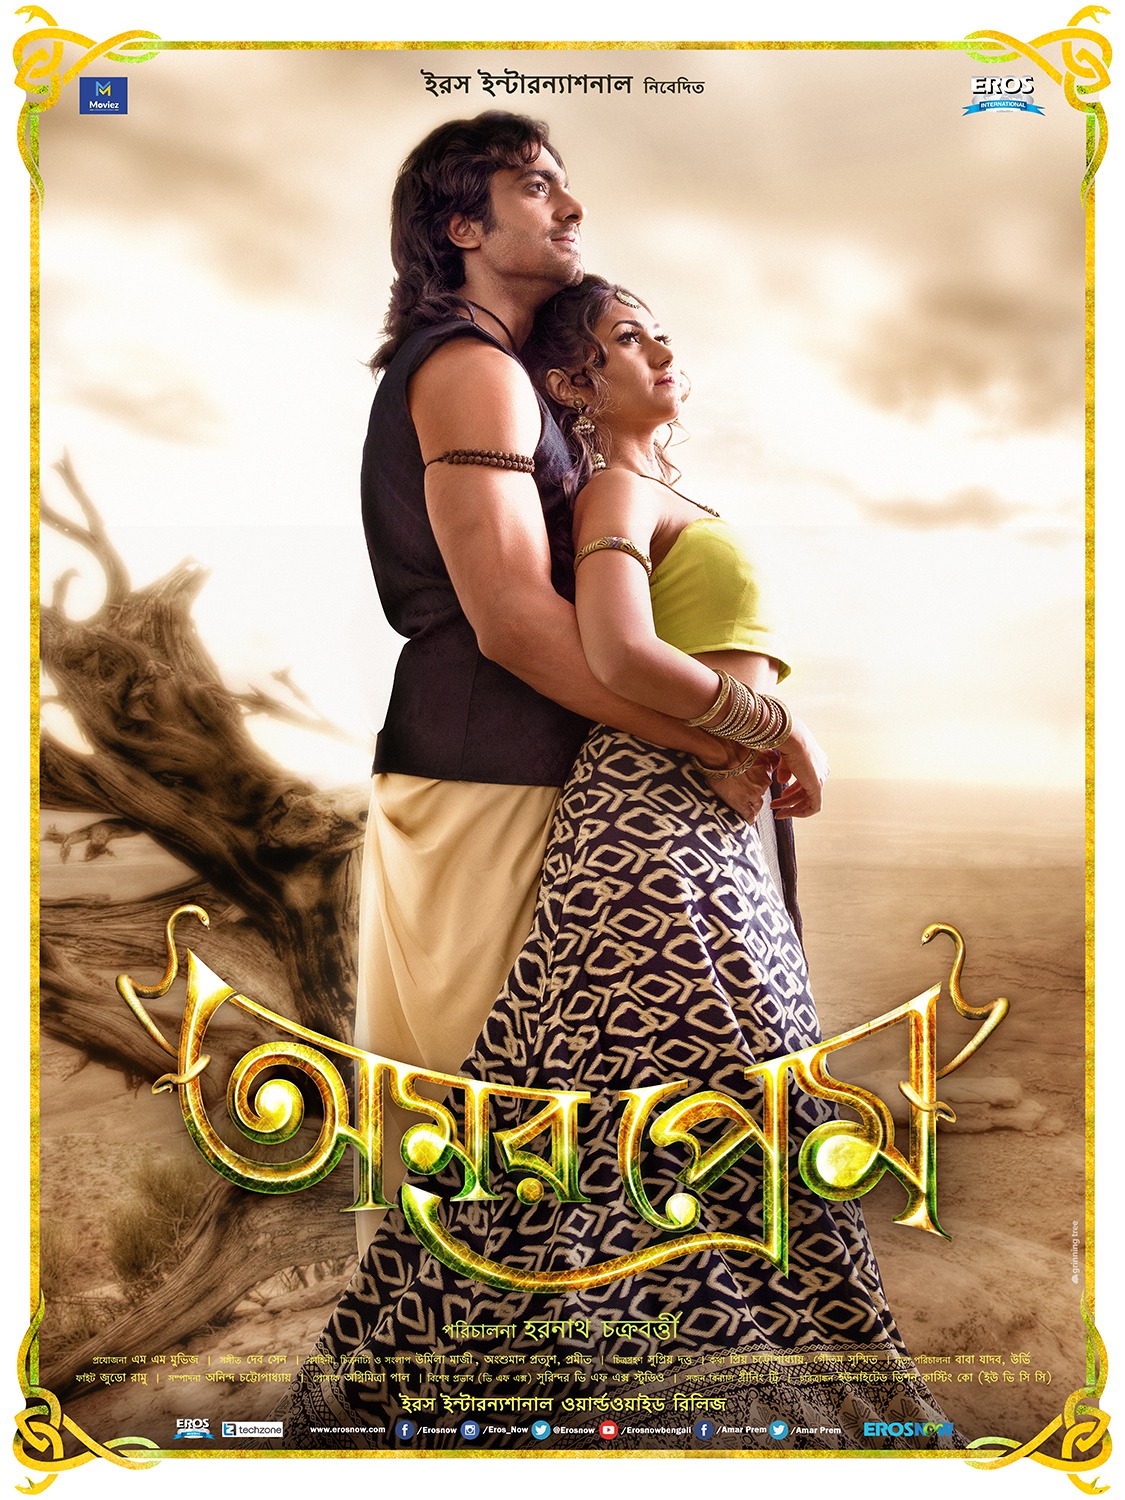 Extra Large Movie Poster Image for Amar Prem (#5 of 9)